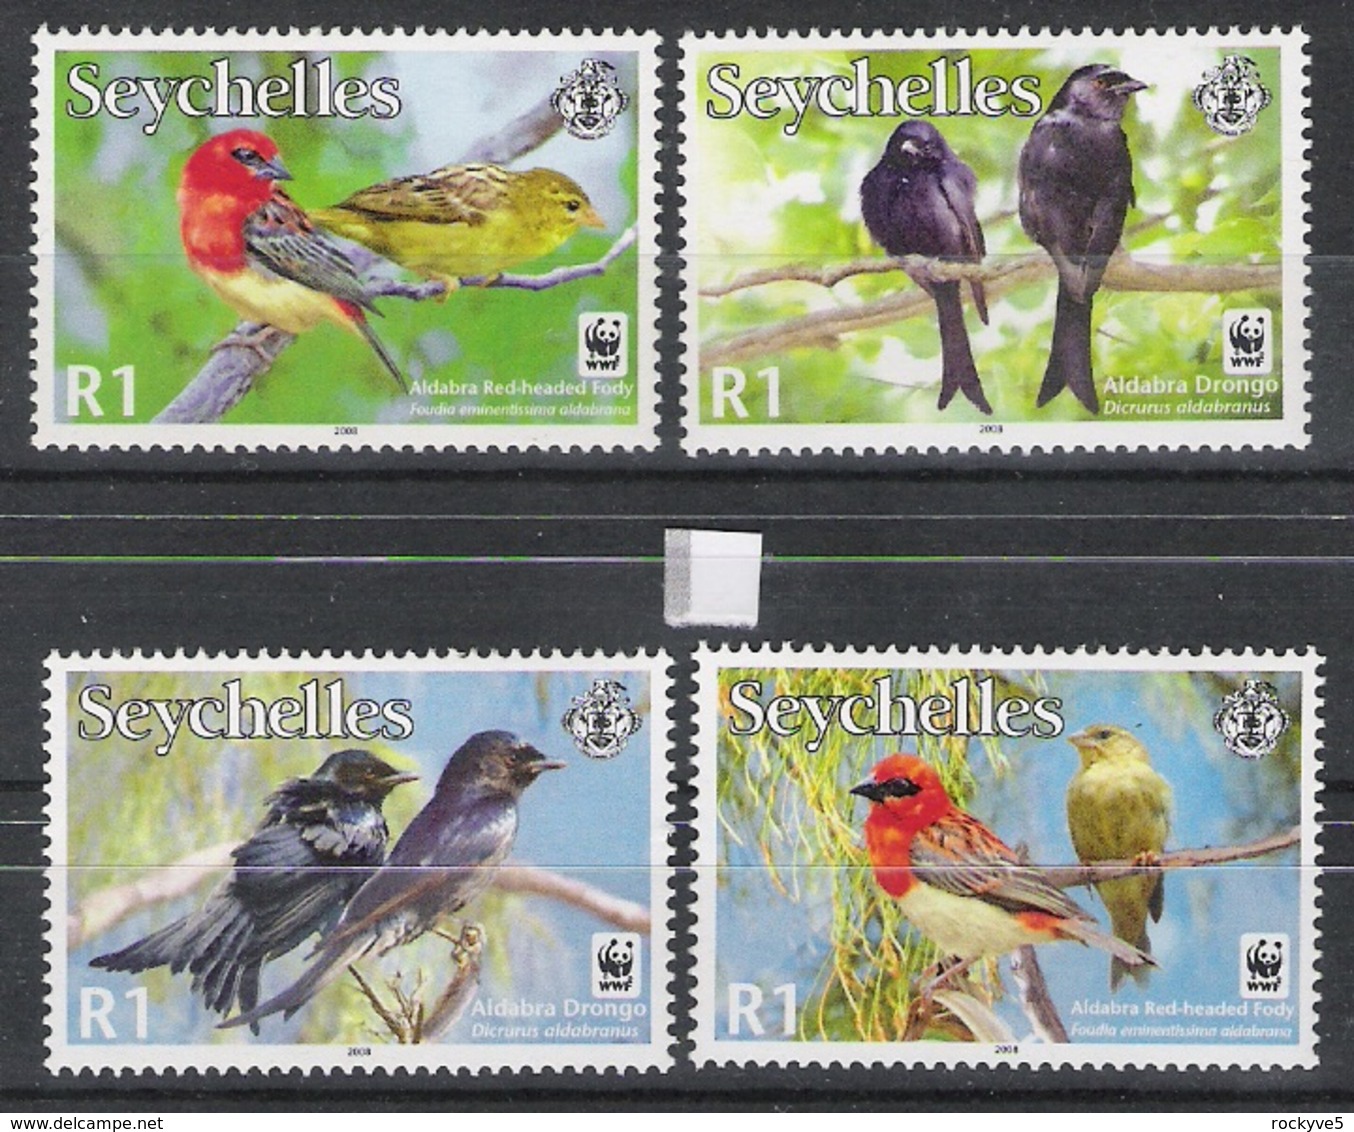 WWF Seychelles 2008 Drongos + Fody MNH CV £3.00 - Songbirds & Tree Dwellers